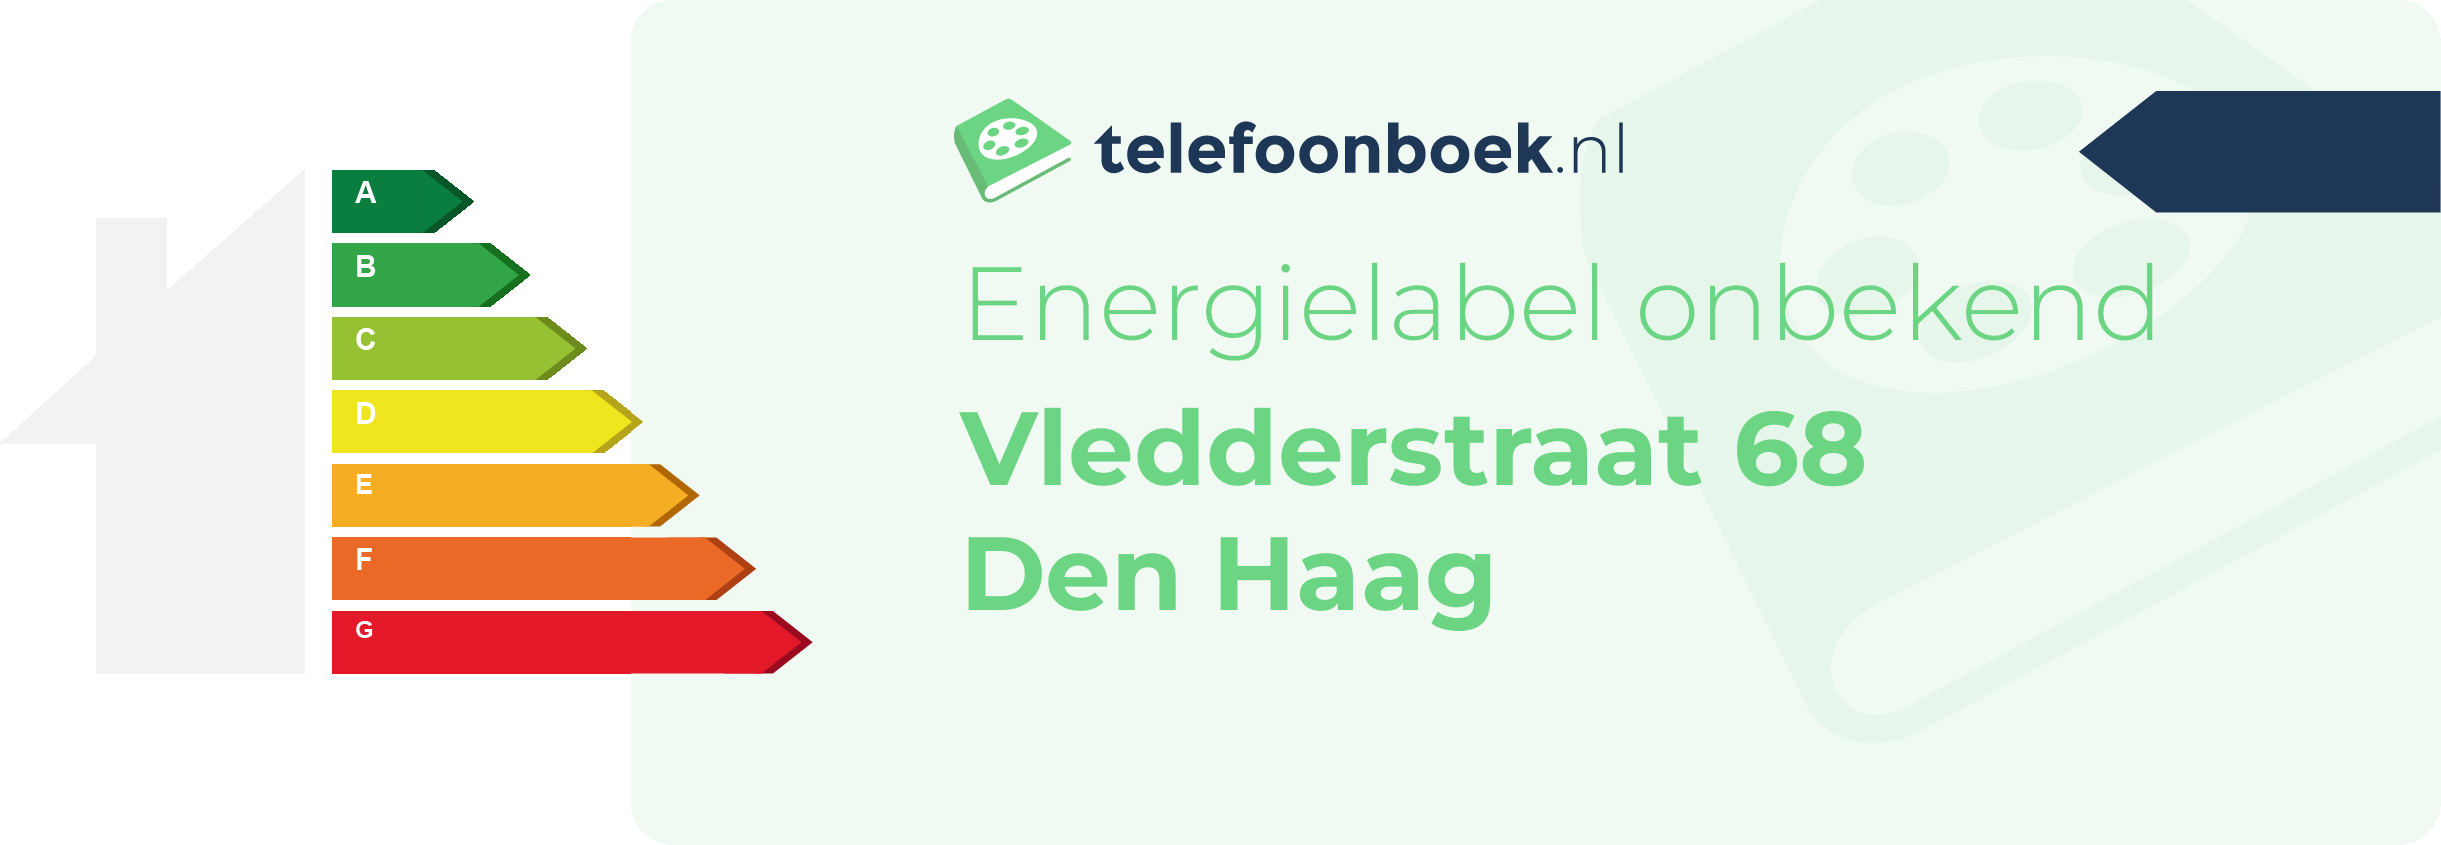 Energielabel Vledderstraat 68 Den Haag